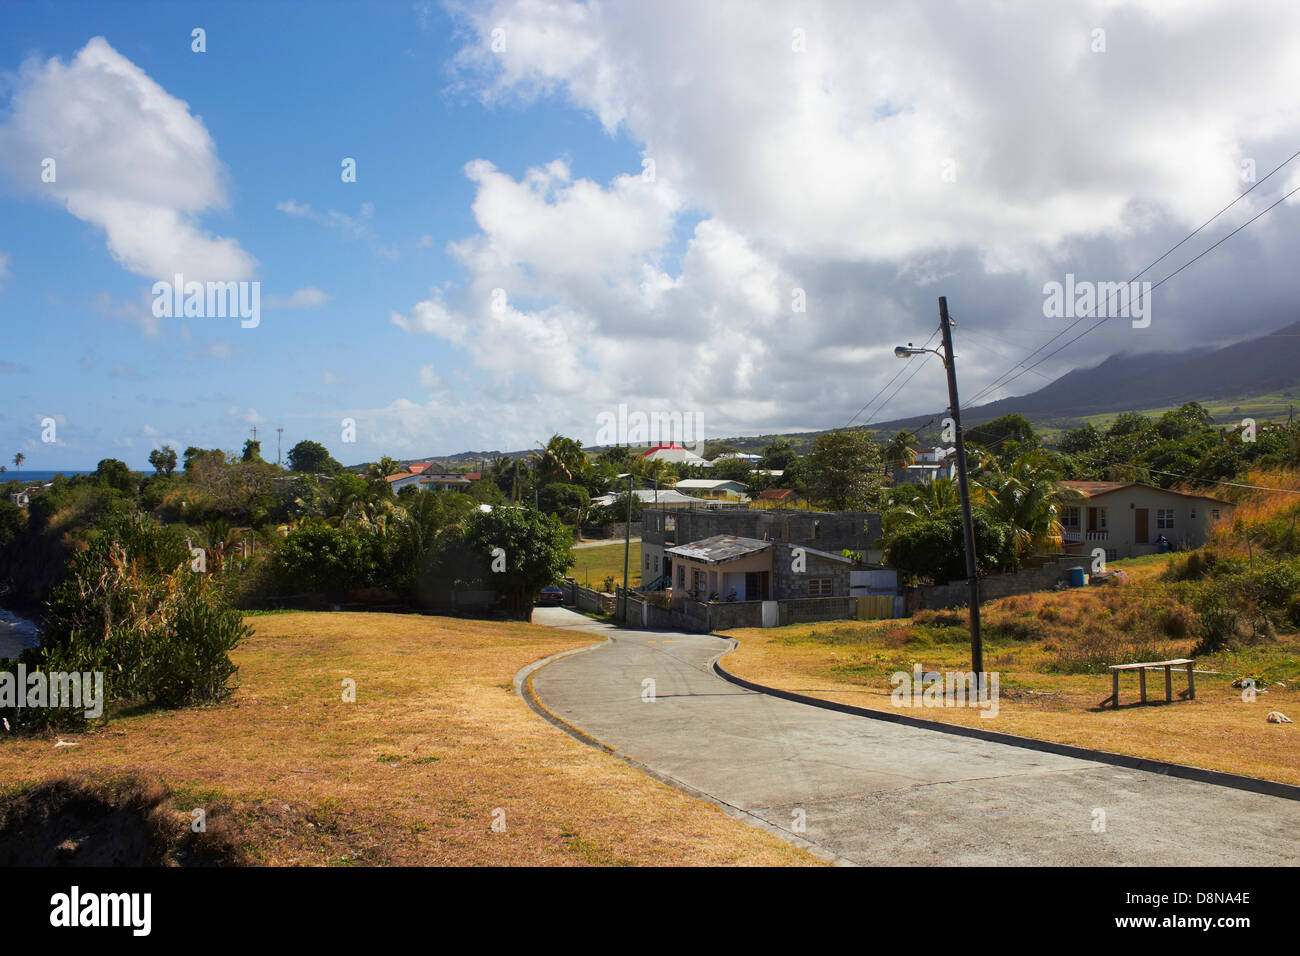 Karibikinsel Basseterre, St. Kitts und Nevis Insel in der Karibik Stockfoto